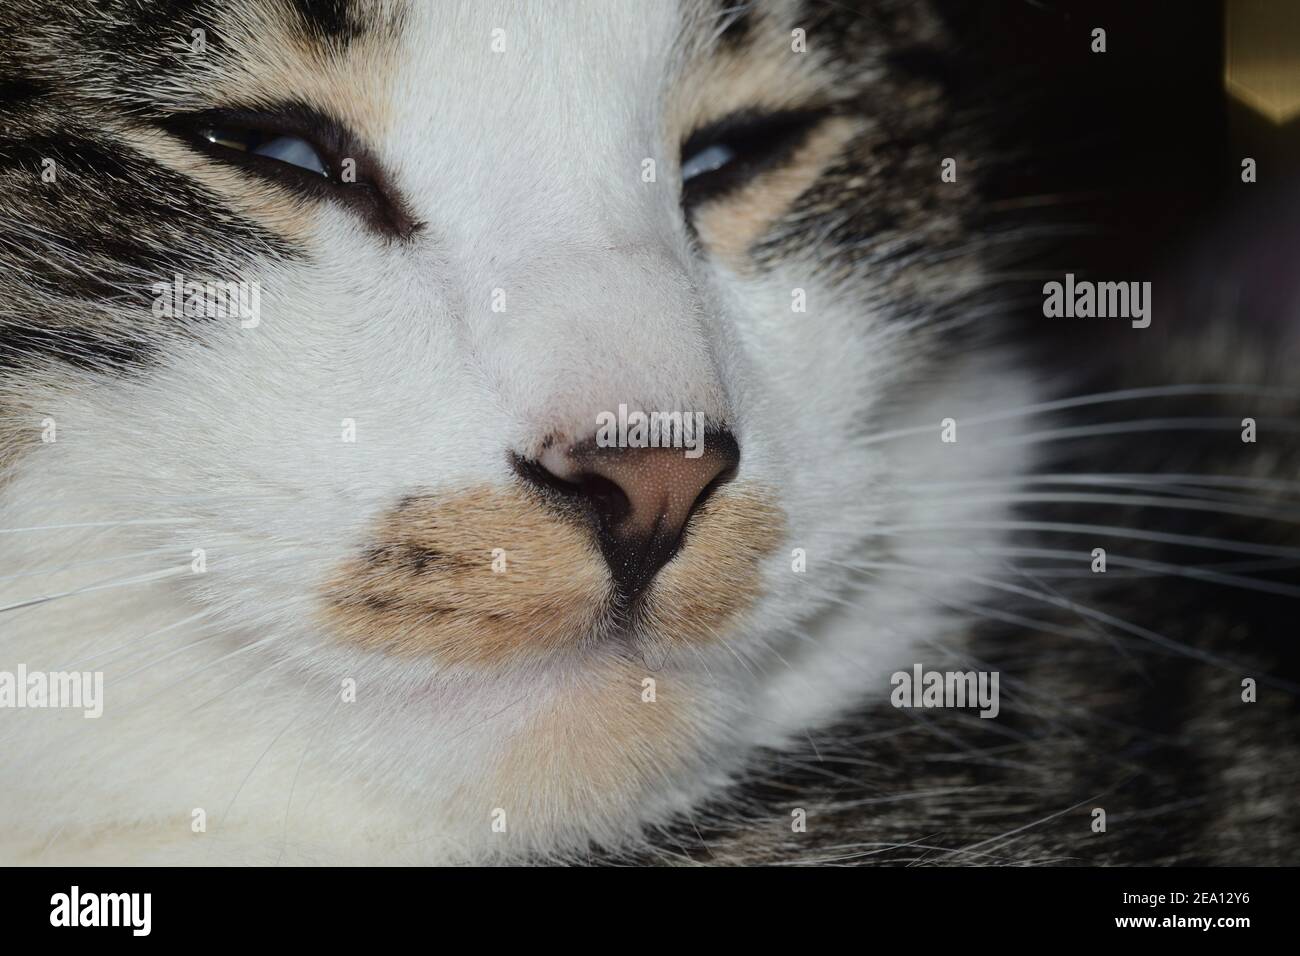 closeup portrait of a tabby cat Stock Photo